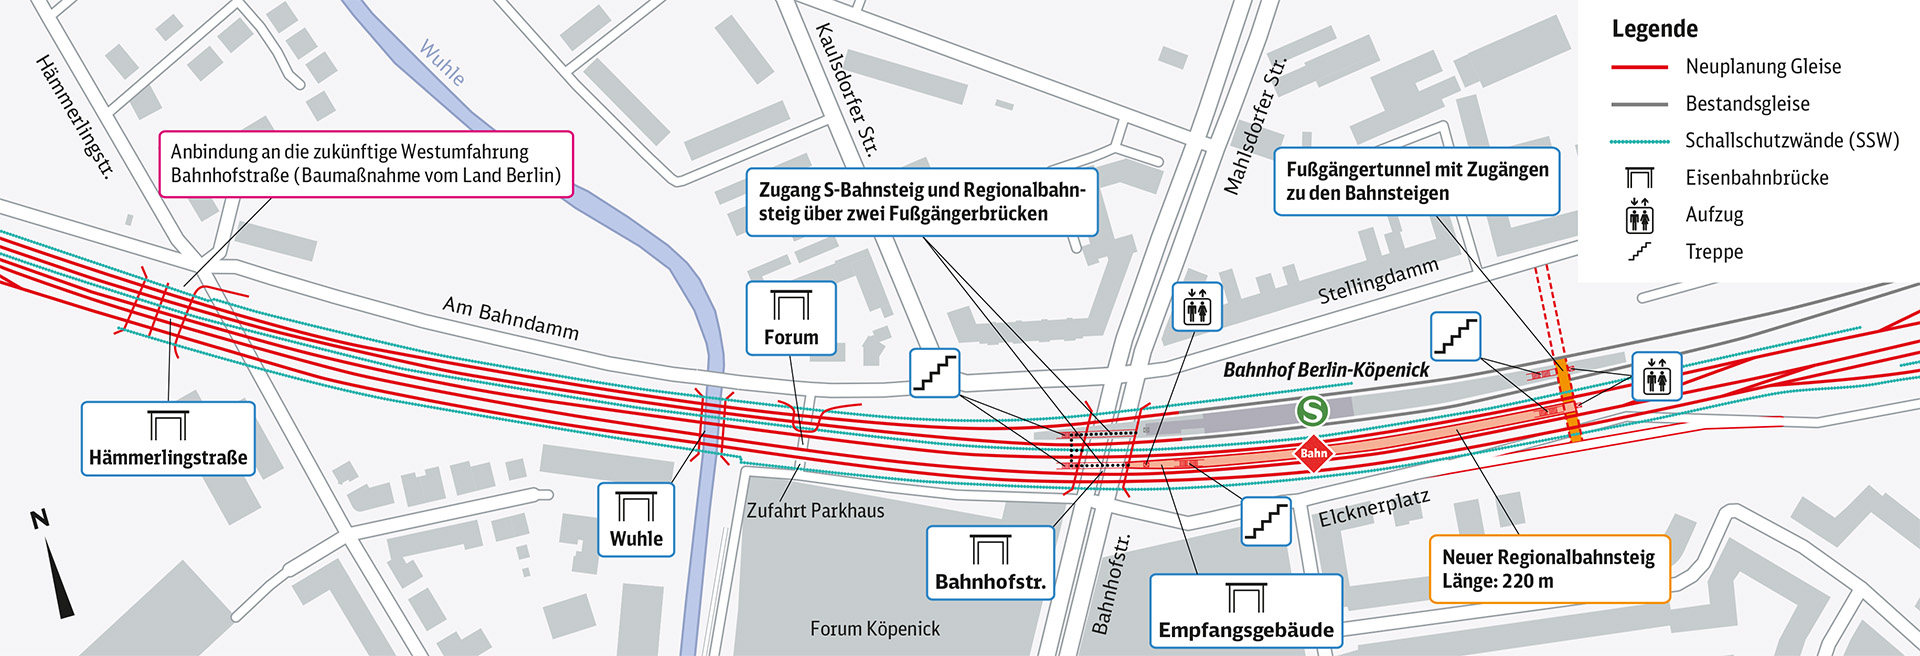 Umbau Bahnhof Köpenick zum regionalbahnhof - Übersichtsplan zu den Arbeiten am Bahnhof Köpenick, Grafik: DB Netz AG